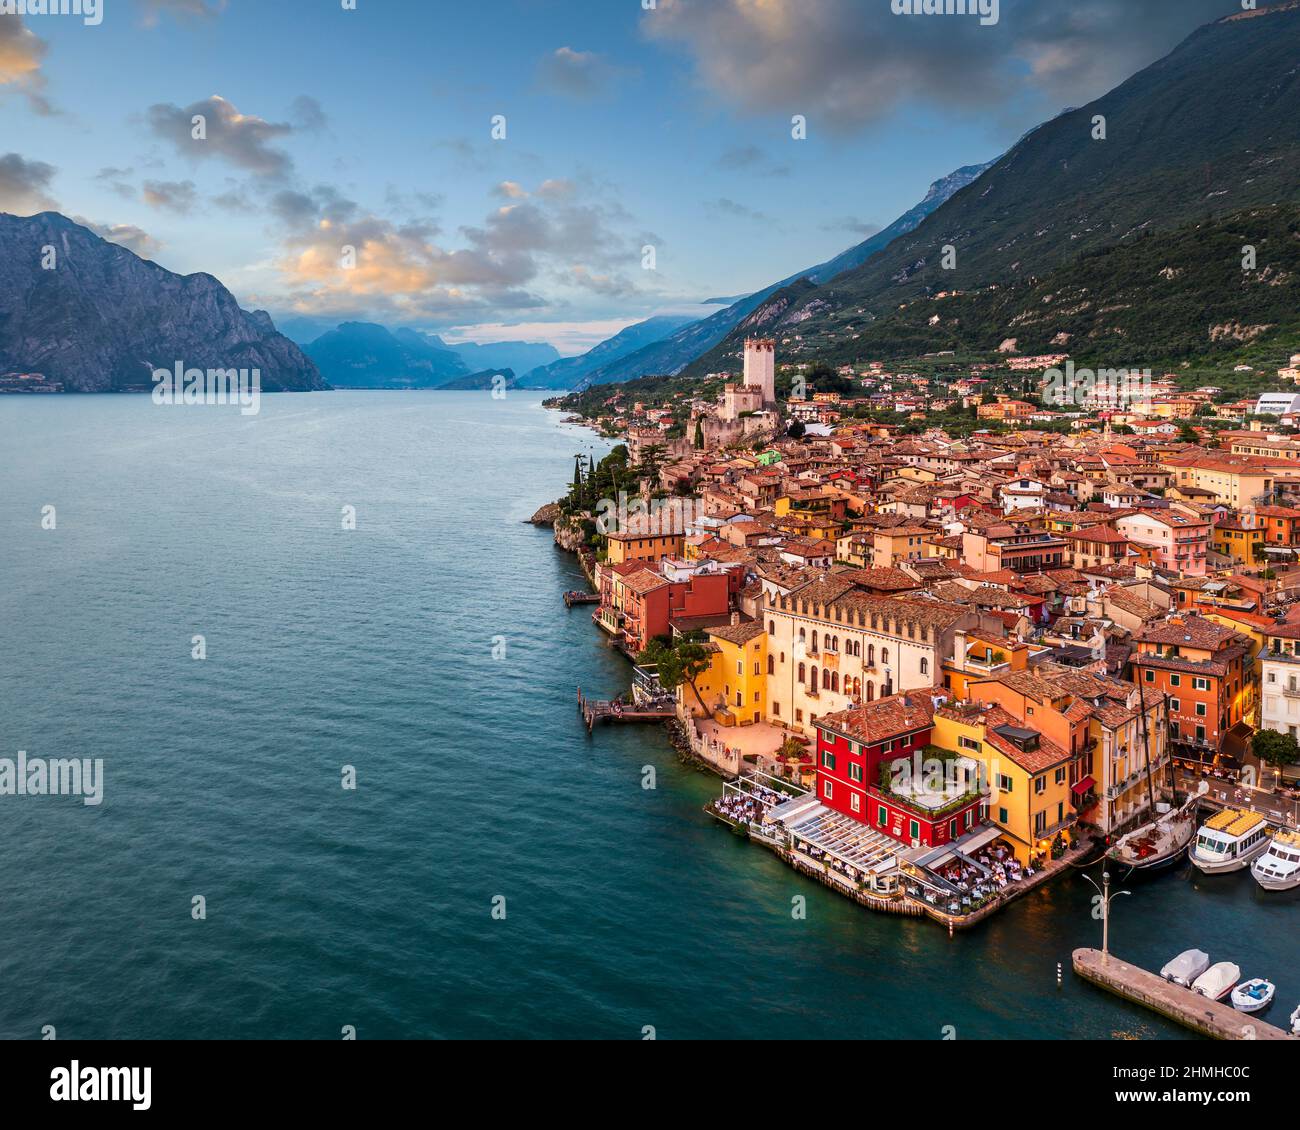 Aerial view of Malcesine, Lake Garda, Italy Stock Photo